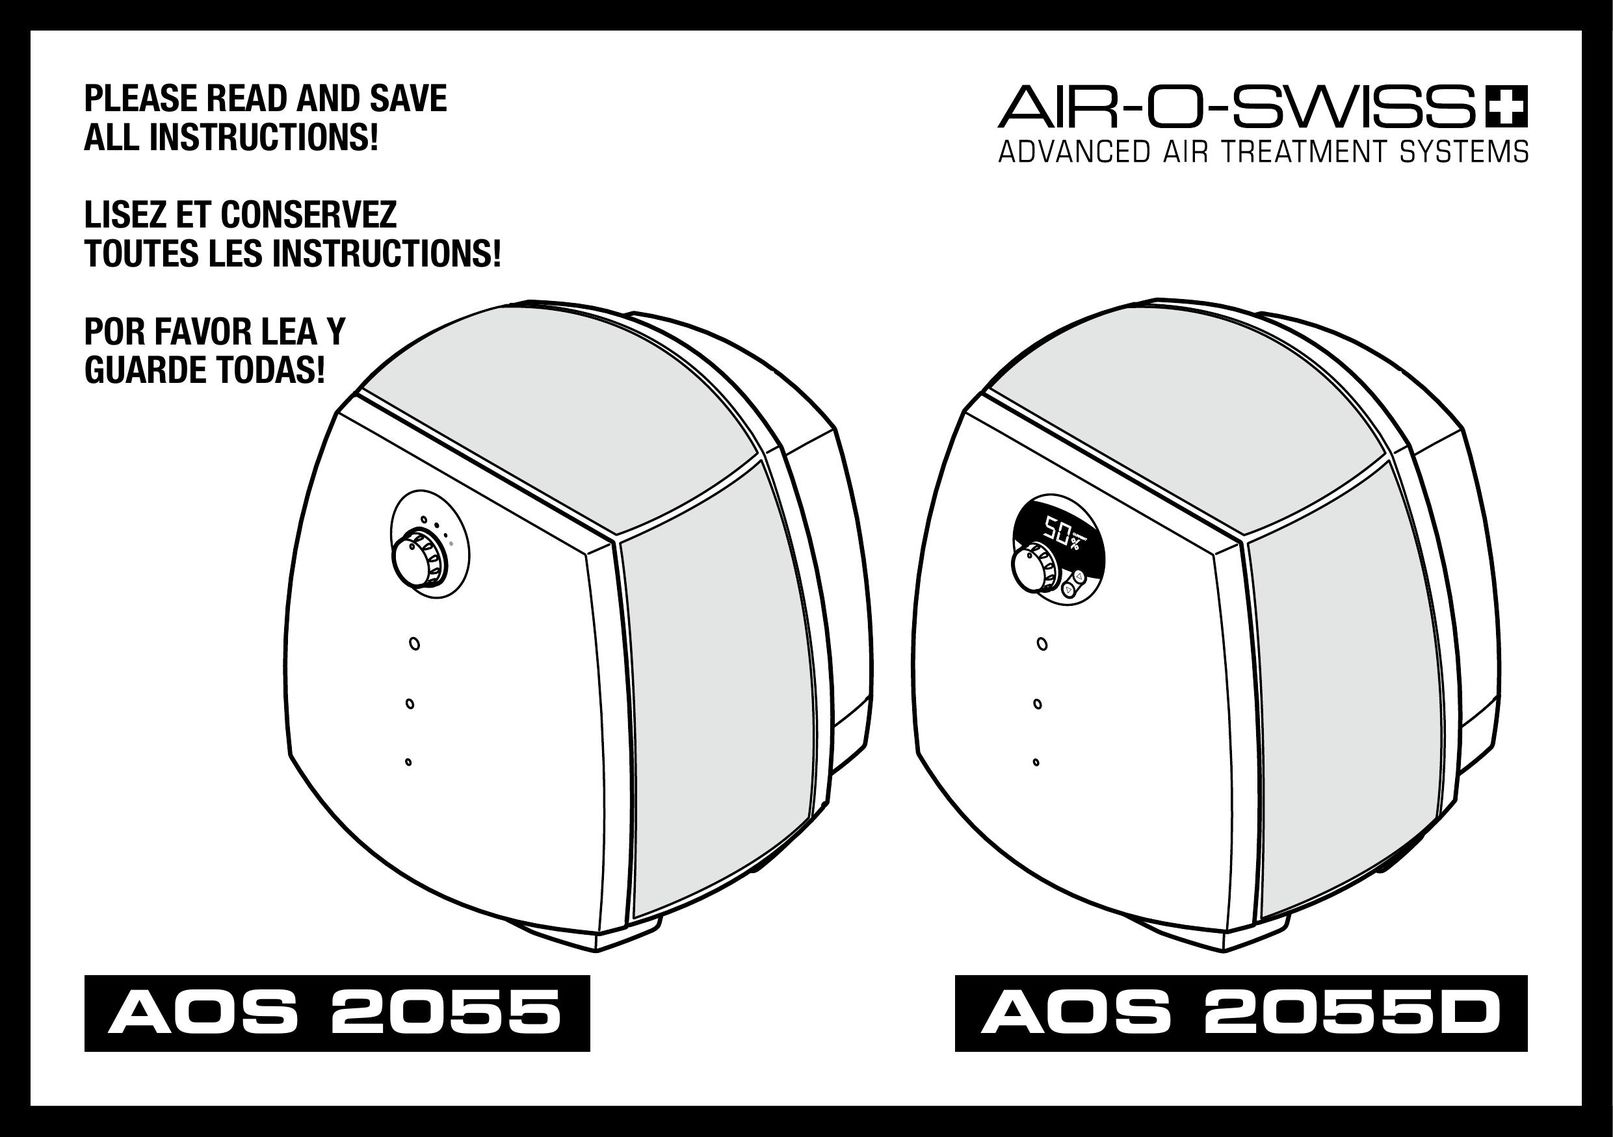 Air-O-Swiss AOS 2055D Air Cleaner User Manual (Page 1)